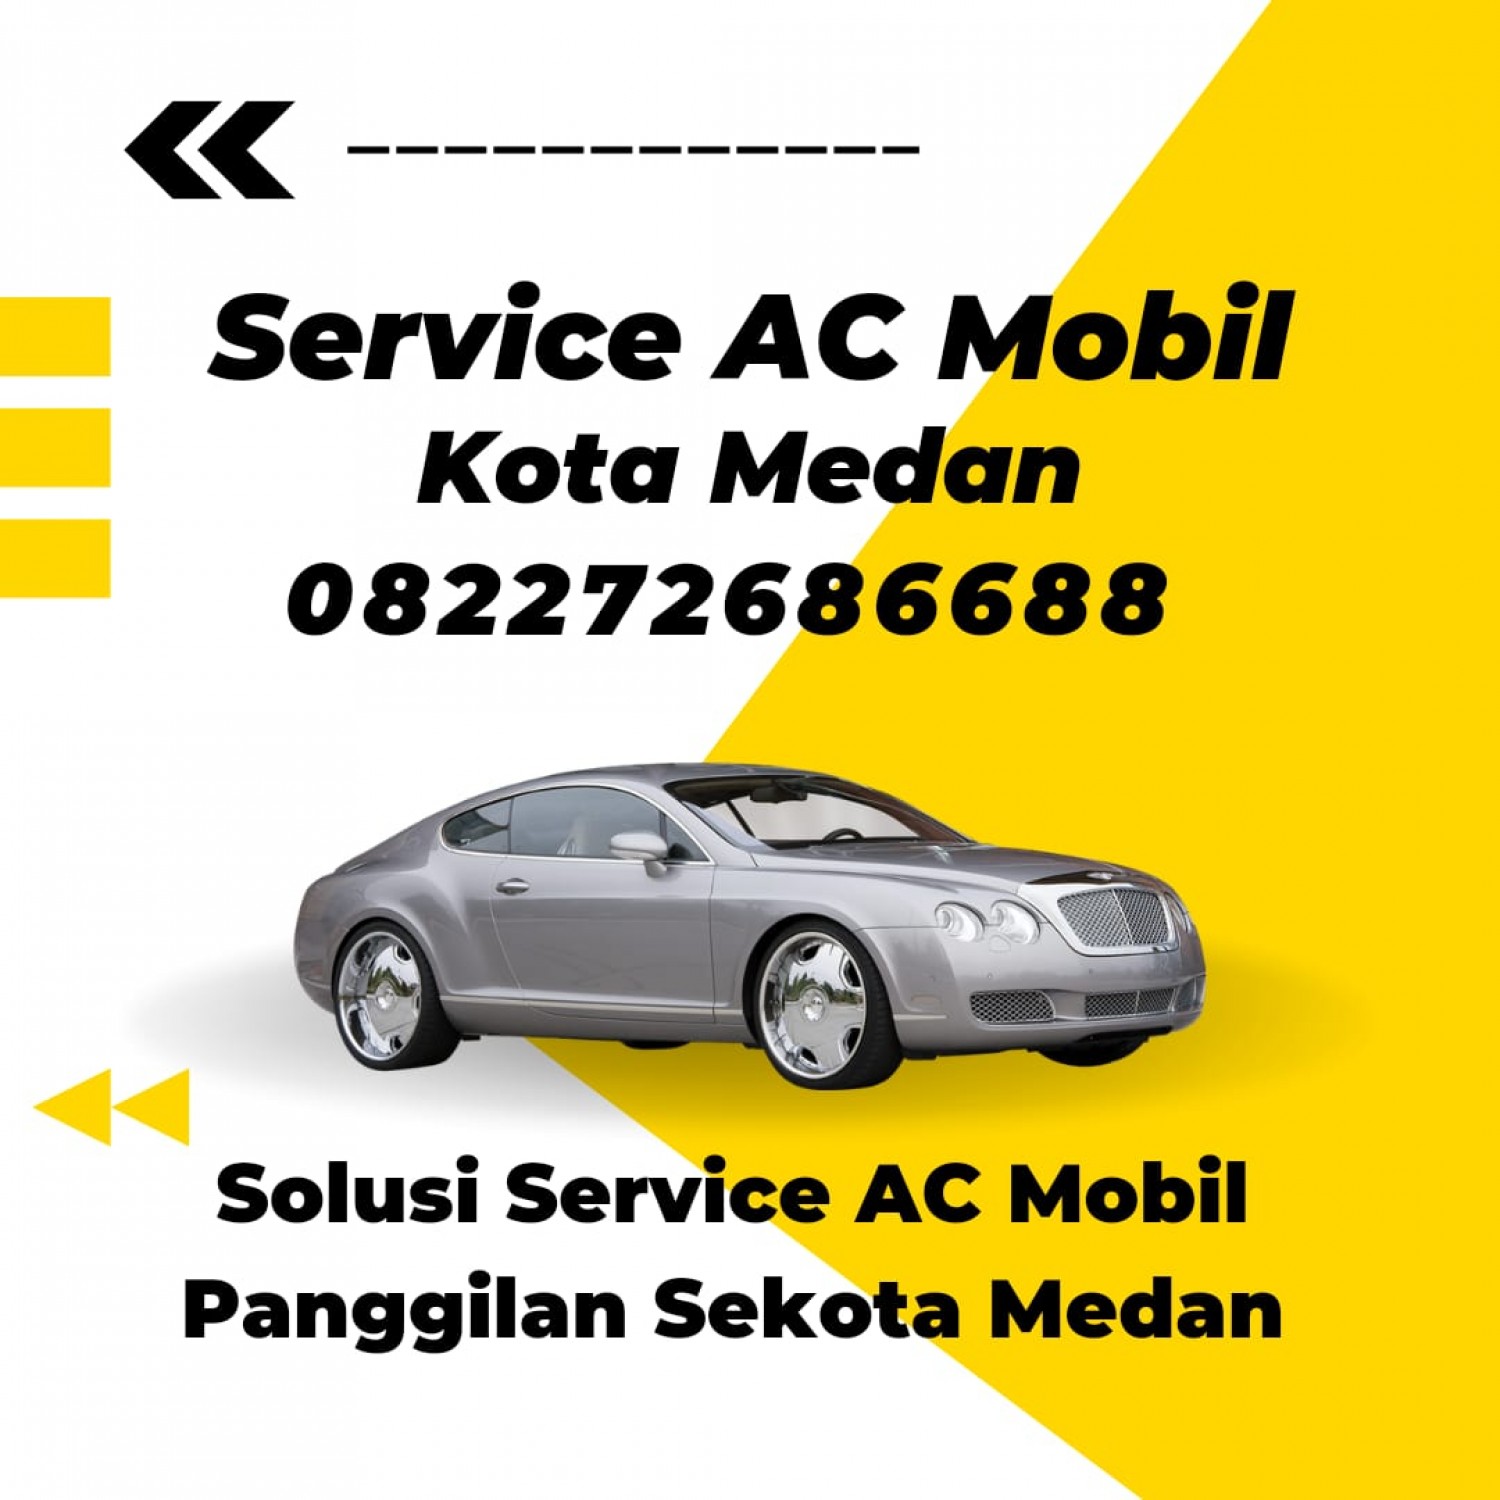 Service AC Mobil Medan 082272686688